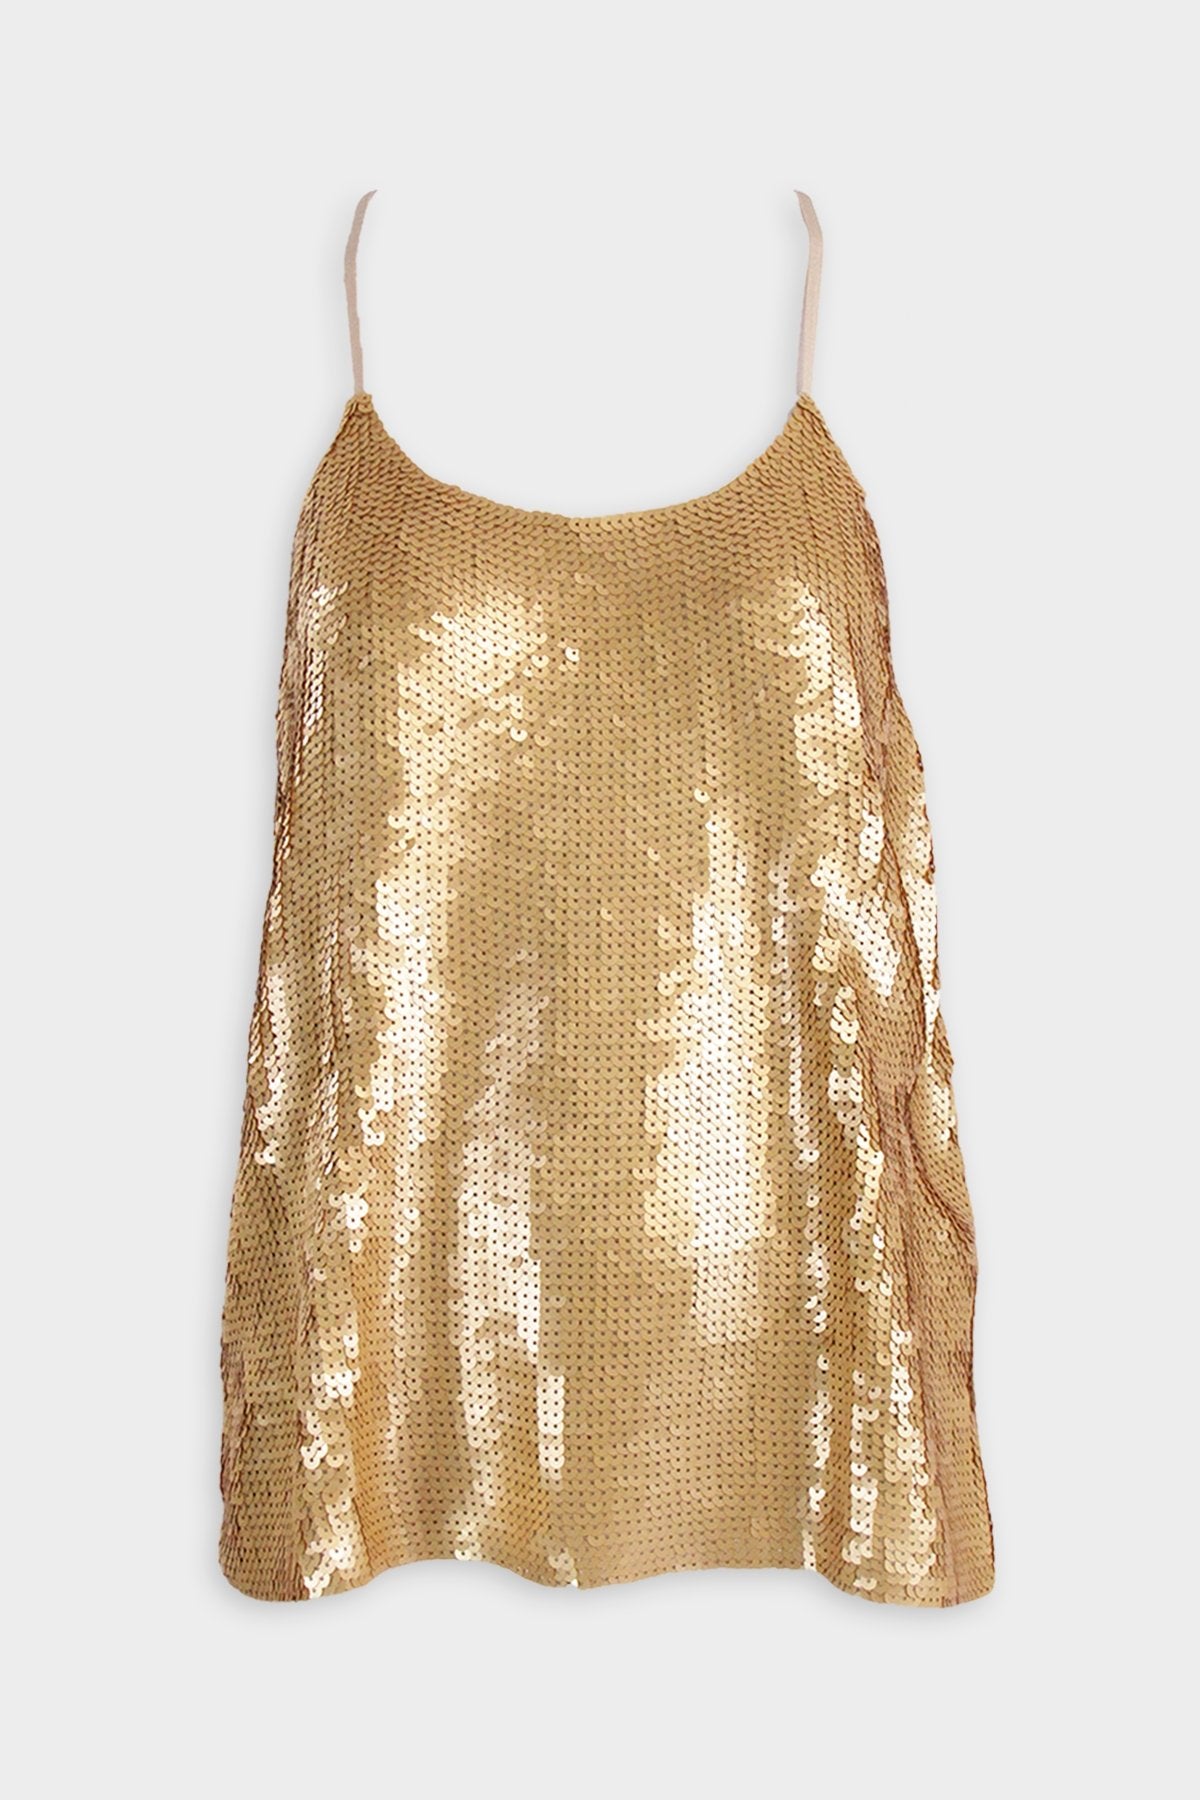 Eclair Sequins Beading Cami Top in Gold - shop-olivia.com